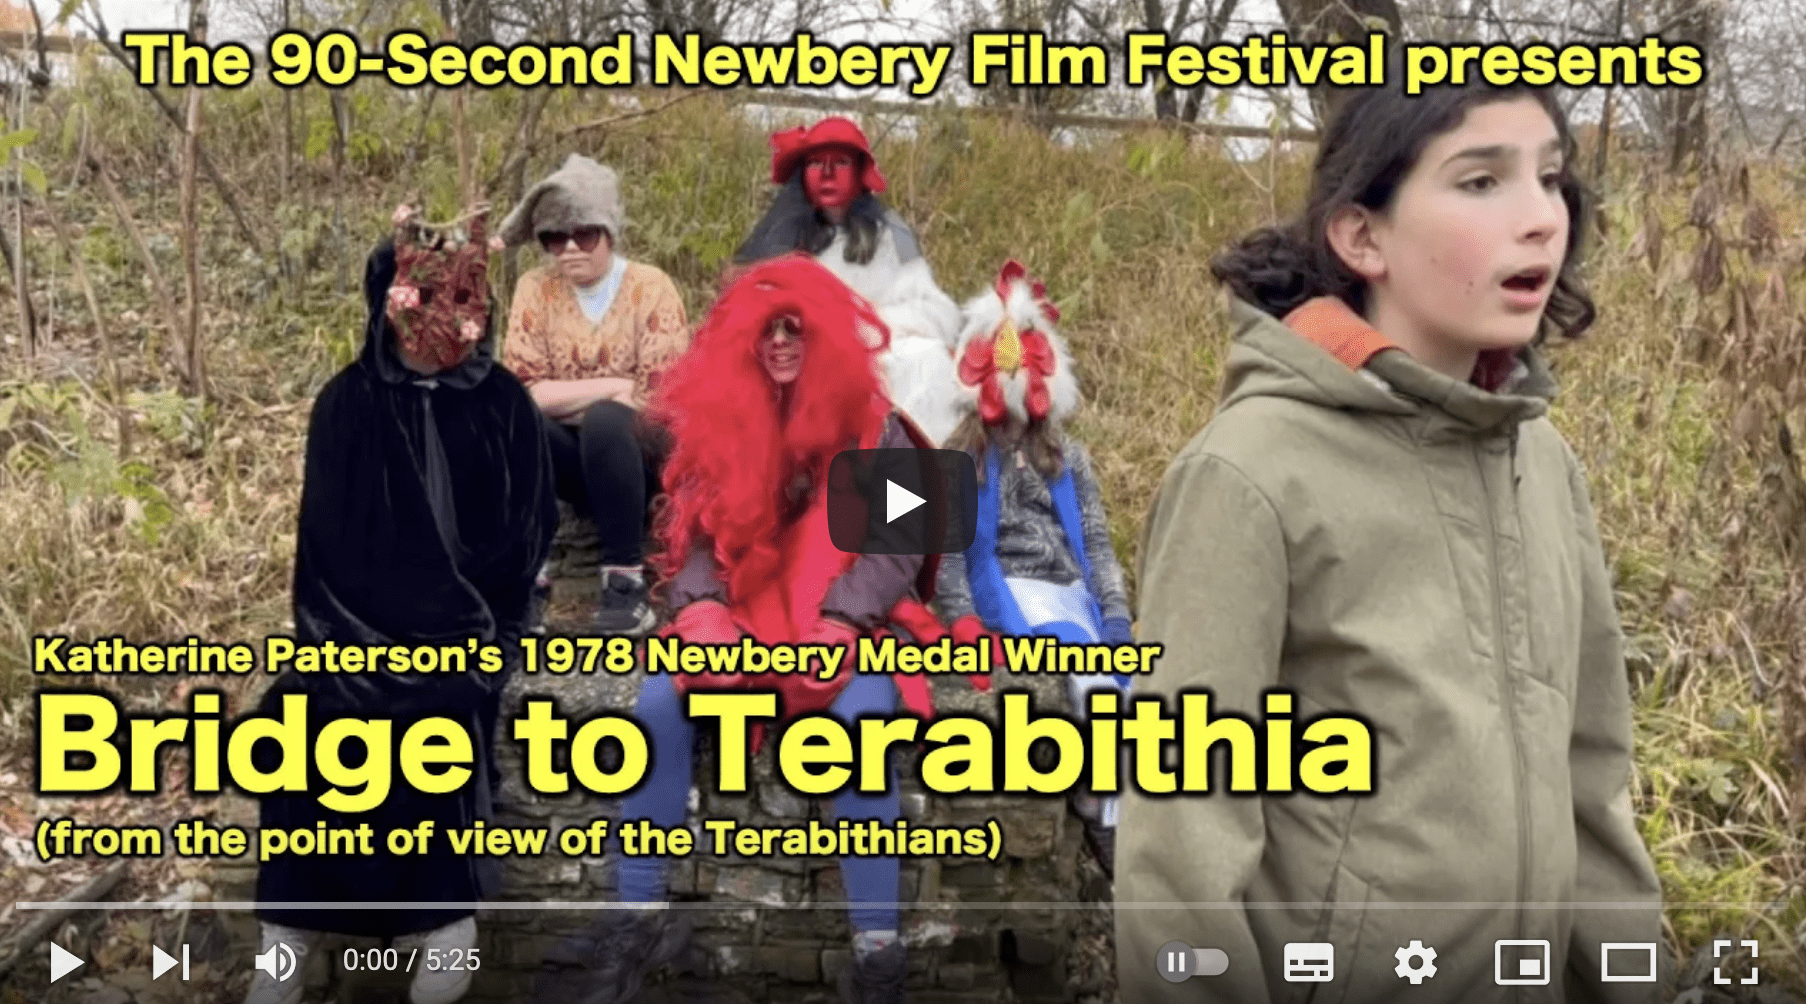 Press Release Fun: Get Ready for the 13th Annual 90-Second Newbery Film Festival!